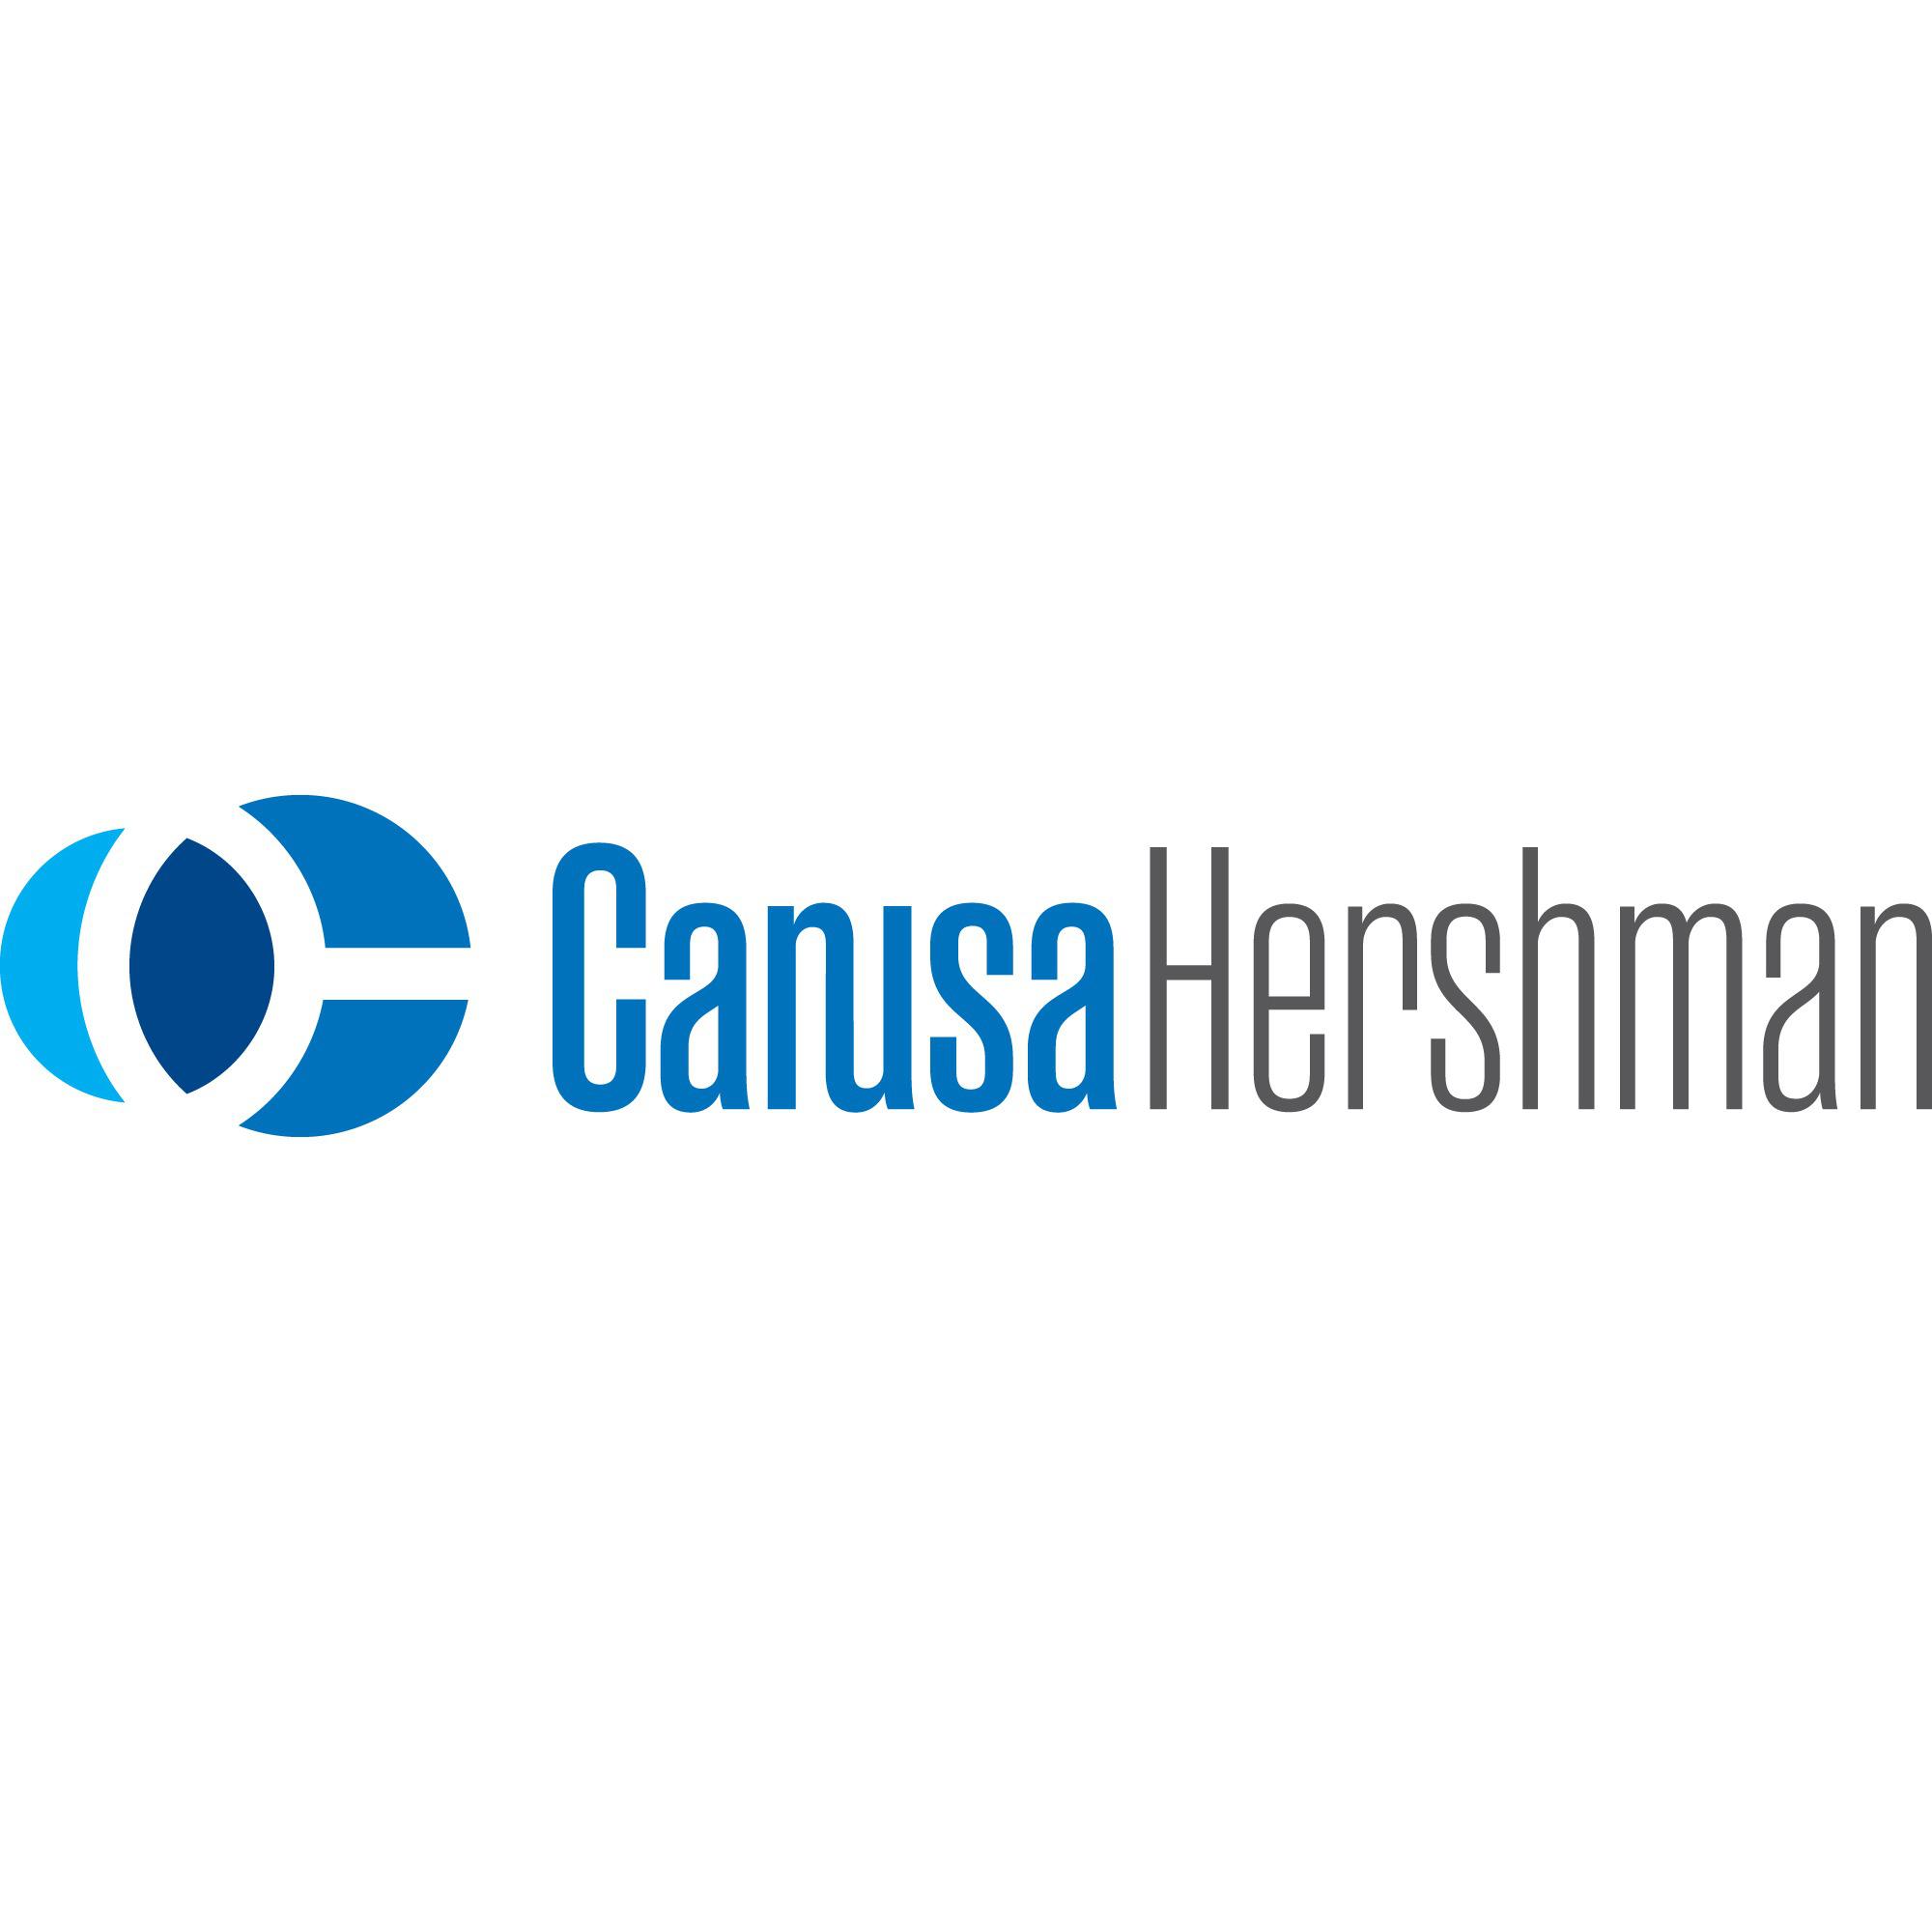 Canusa Hershman